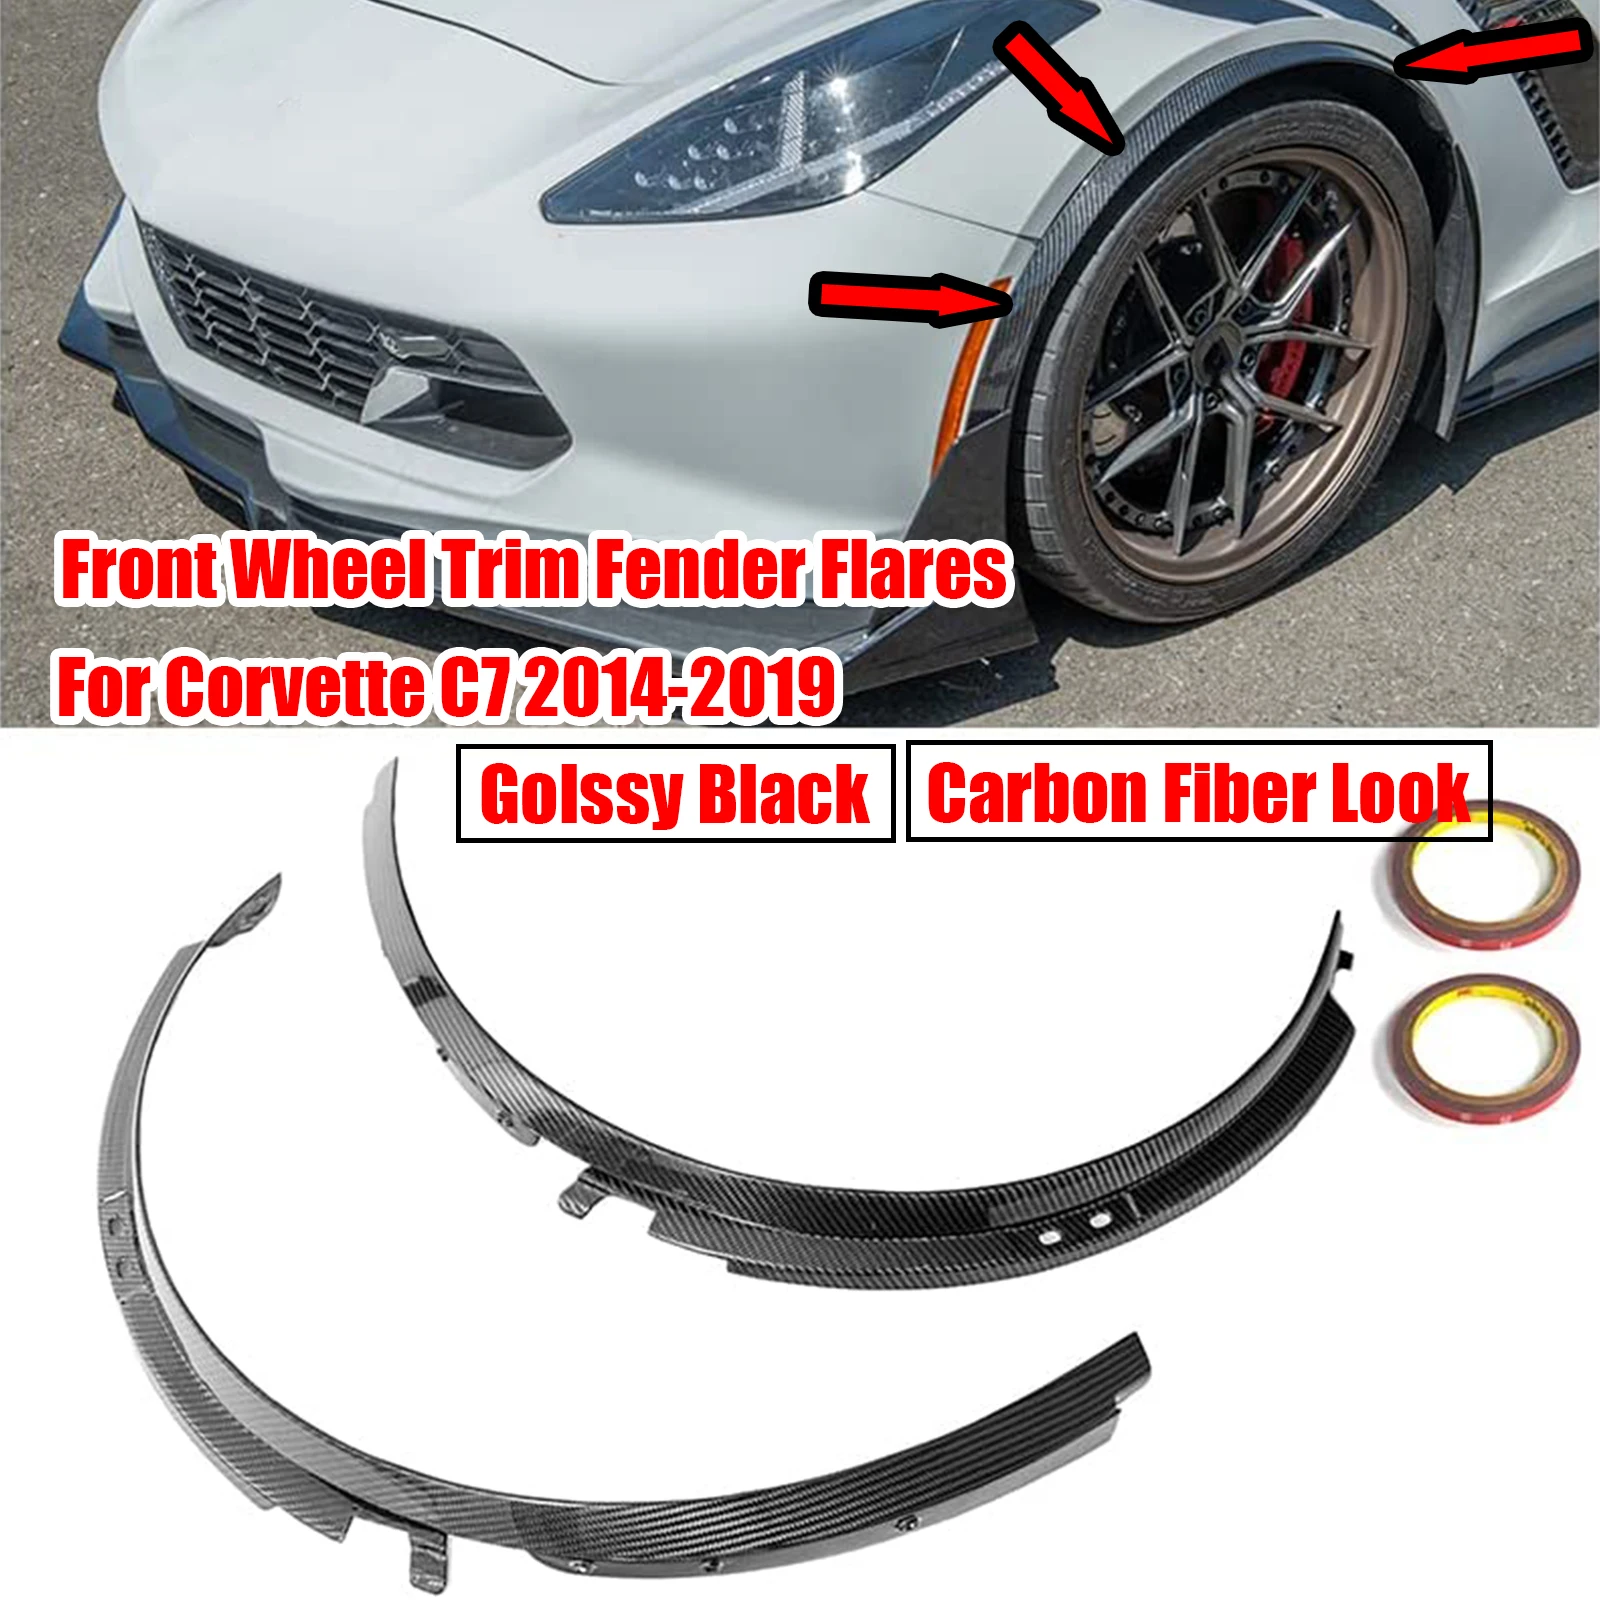 

2Pcs Front Wheel eyebrow Trim Fender Flares For Corvette C7 2014-2019 Glossy Black Carbon Fiber Look